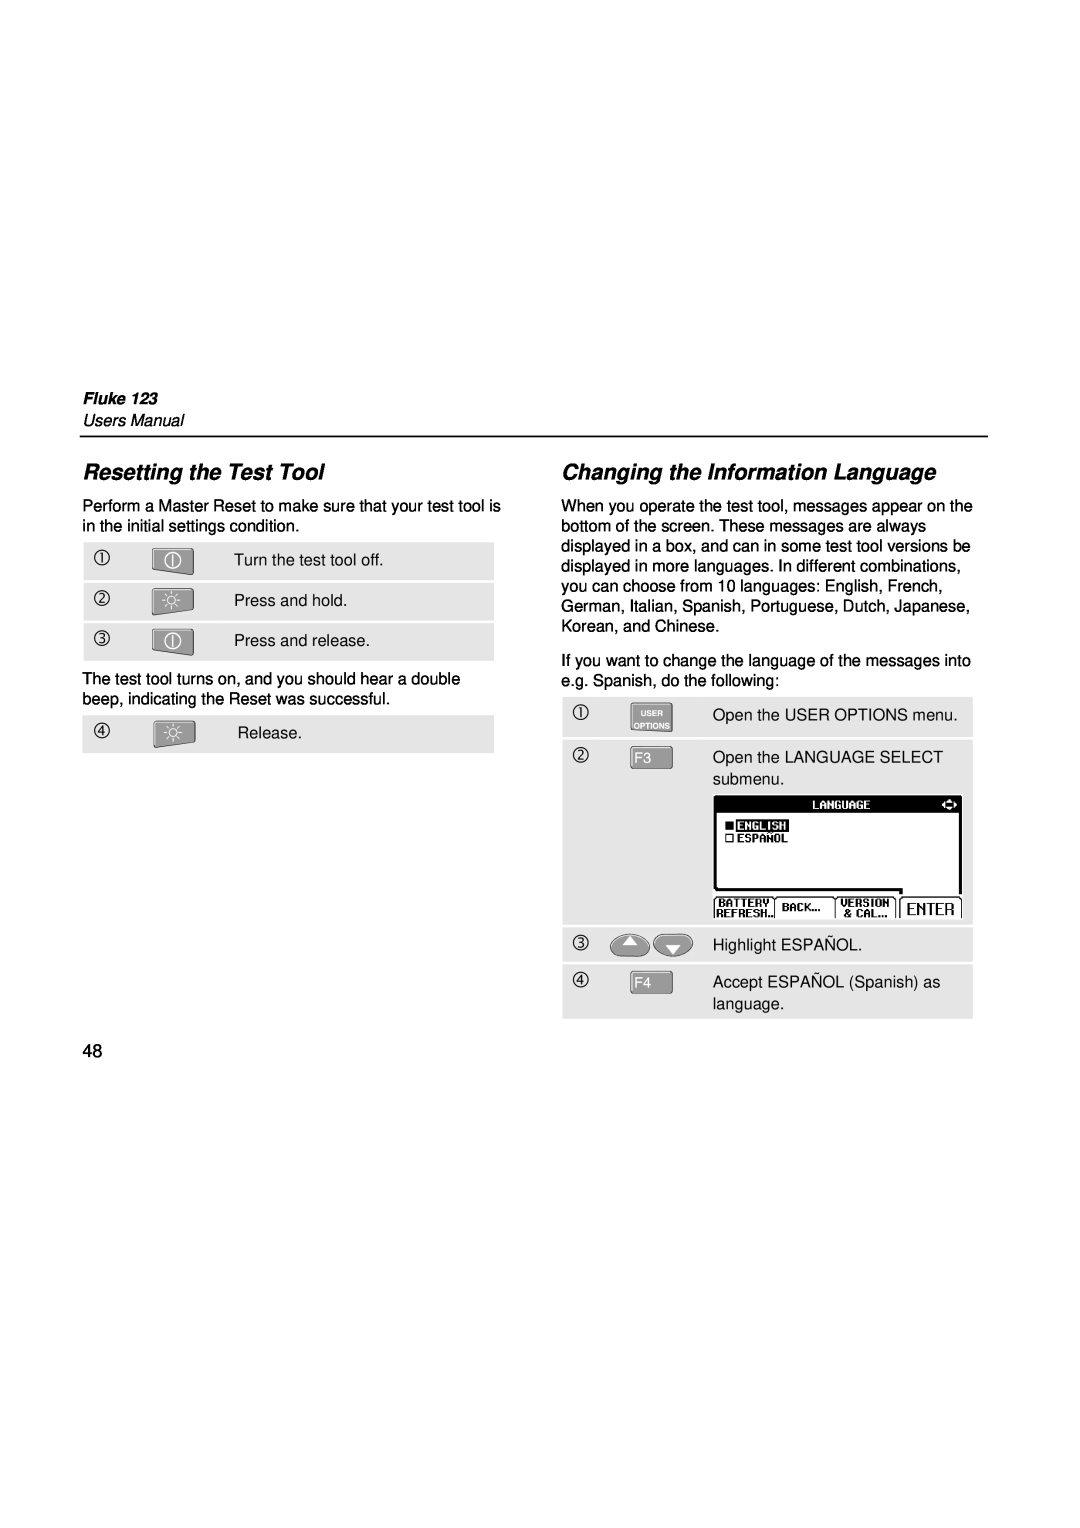 Fluke fluke123 user manual Changing the Information Language, Resetting the Test Tool, Fluke, Users Manual 